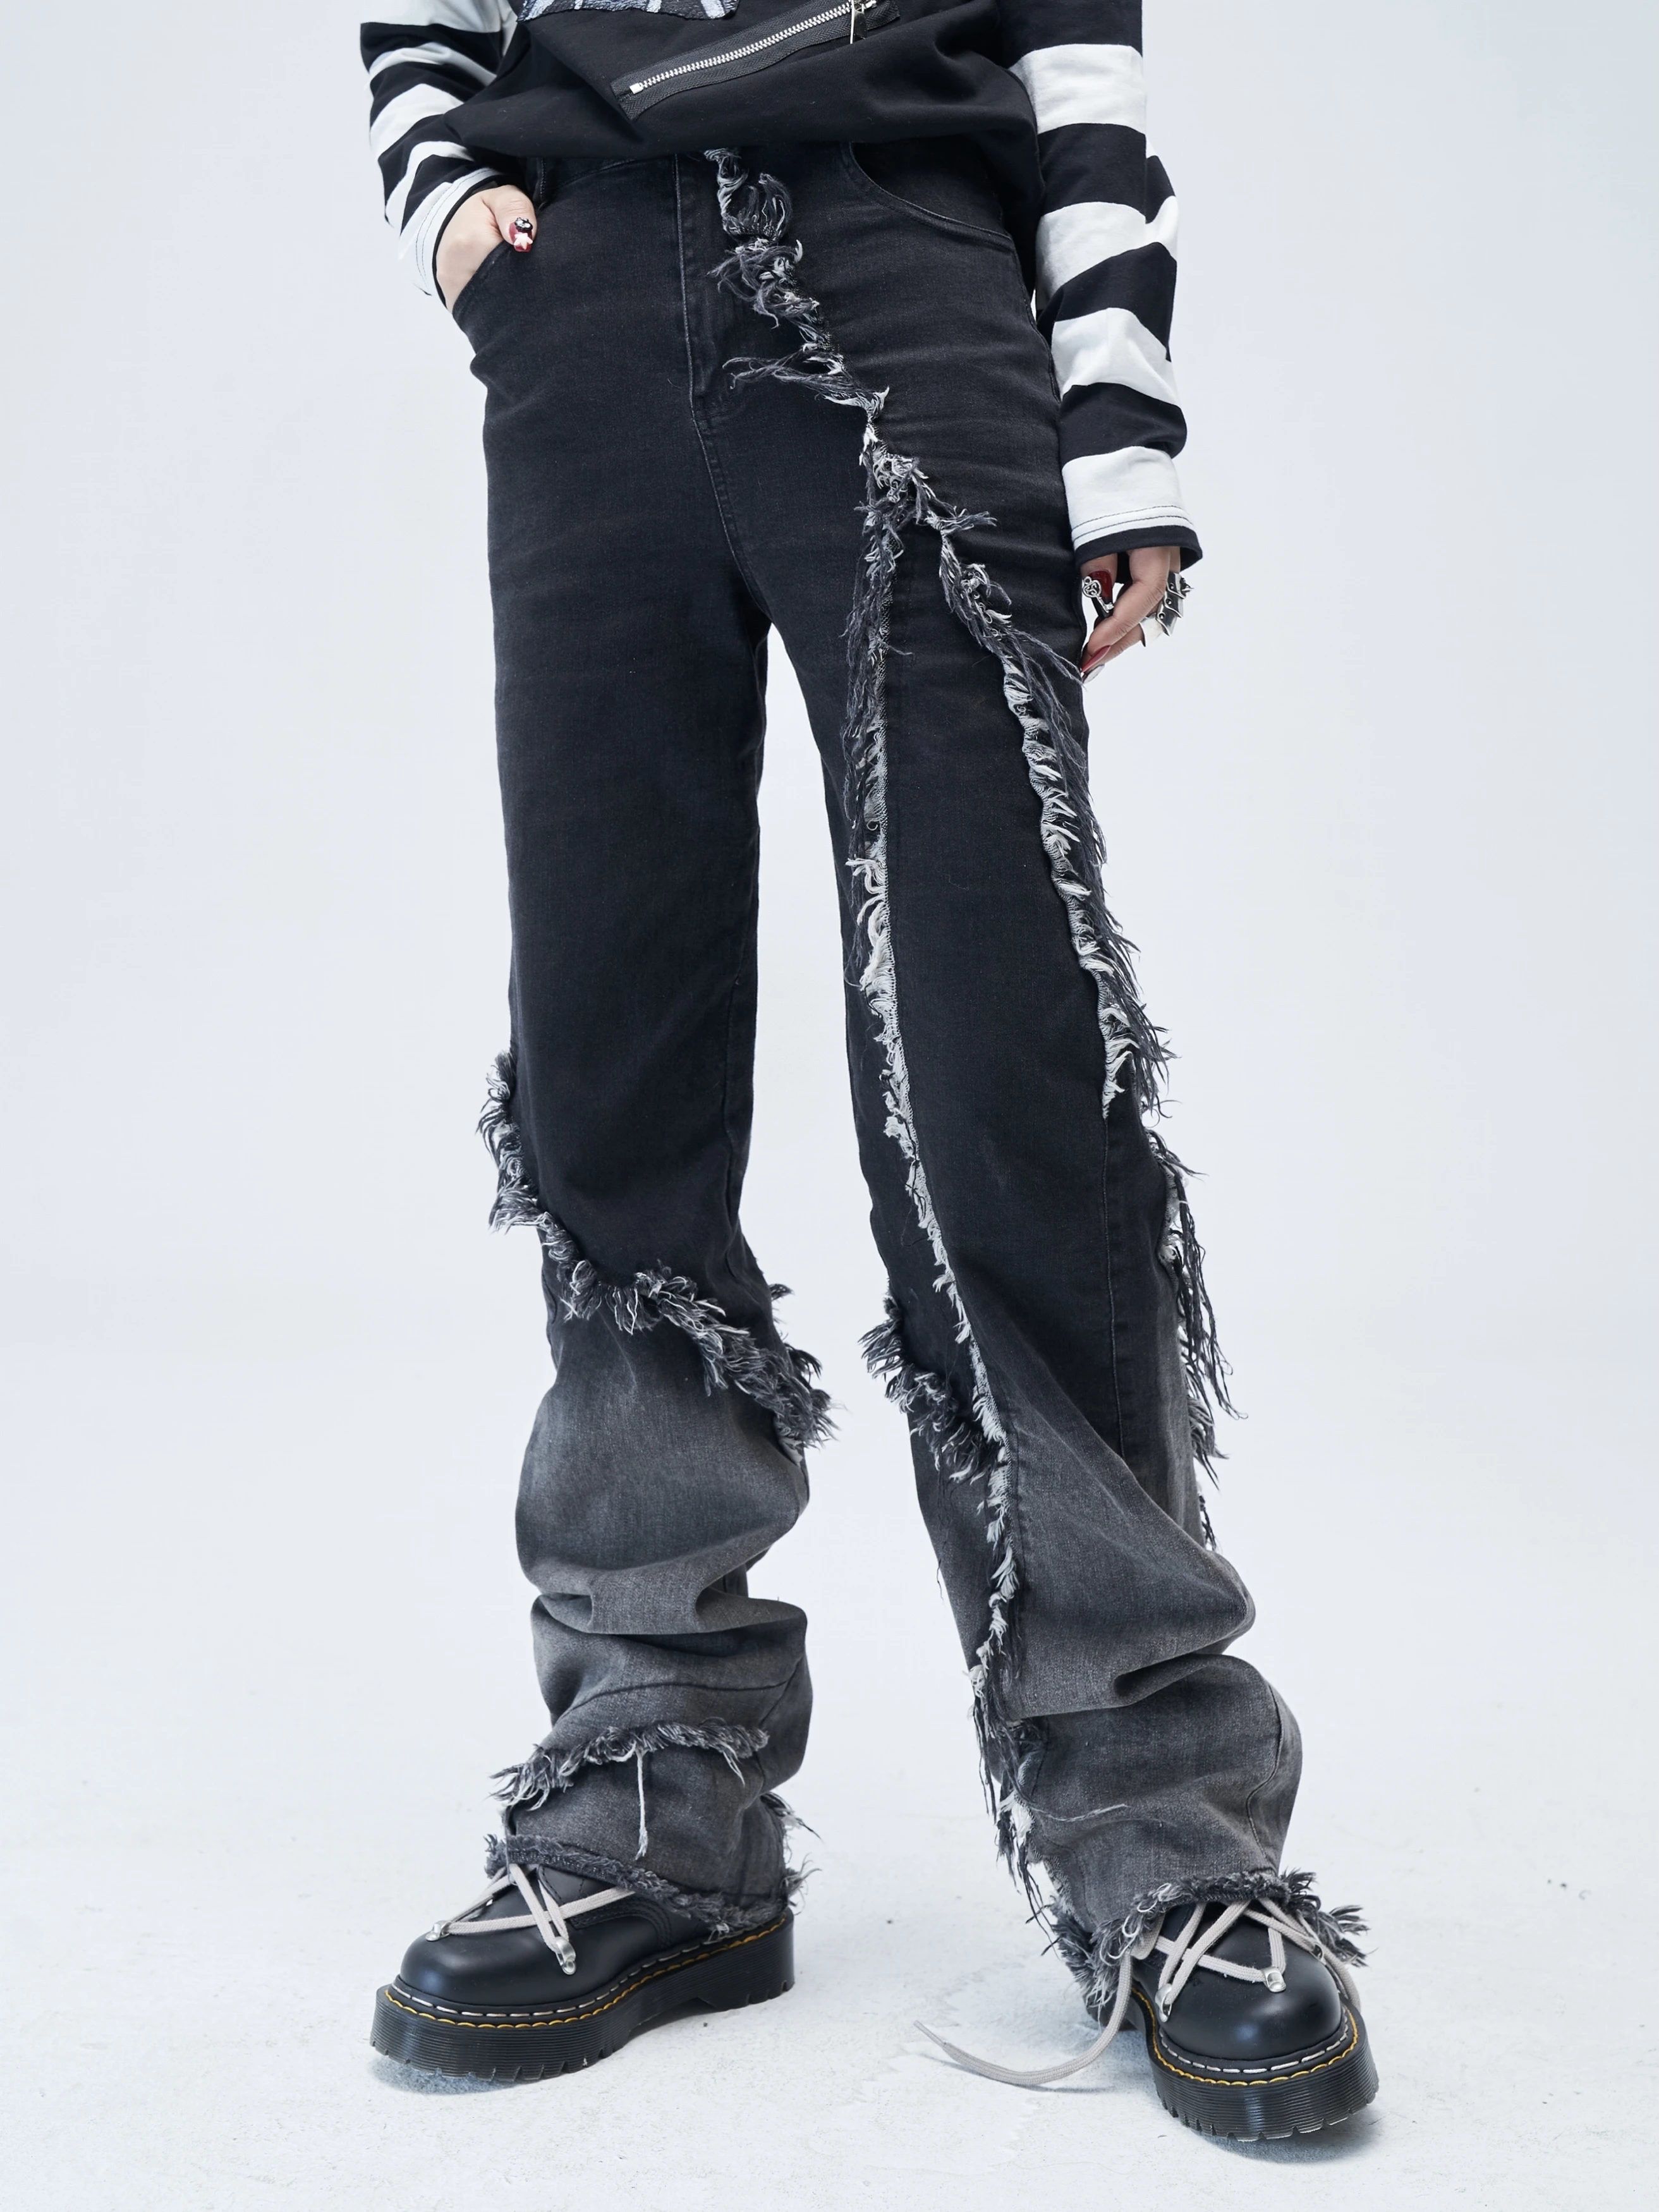 Gradient Black Grey Raw Edge Jeans Couples Autumn Jeans Loose Straight Gothic Punk Tassels Denim Pants Women